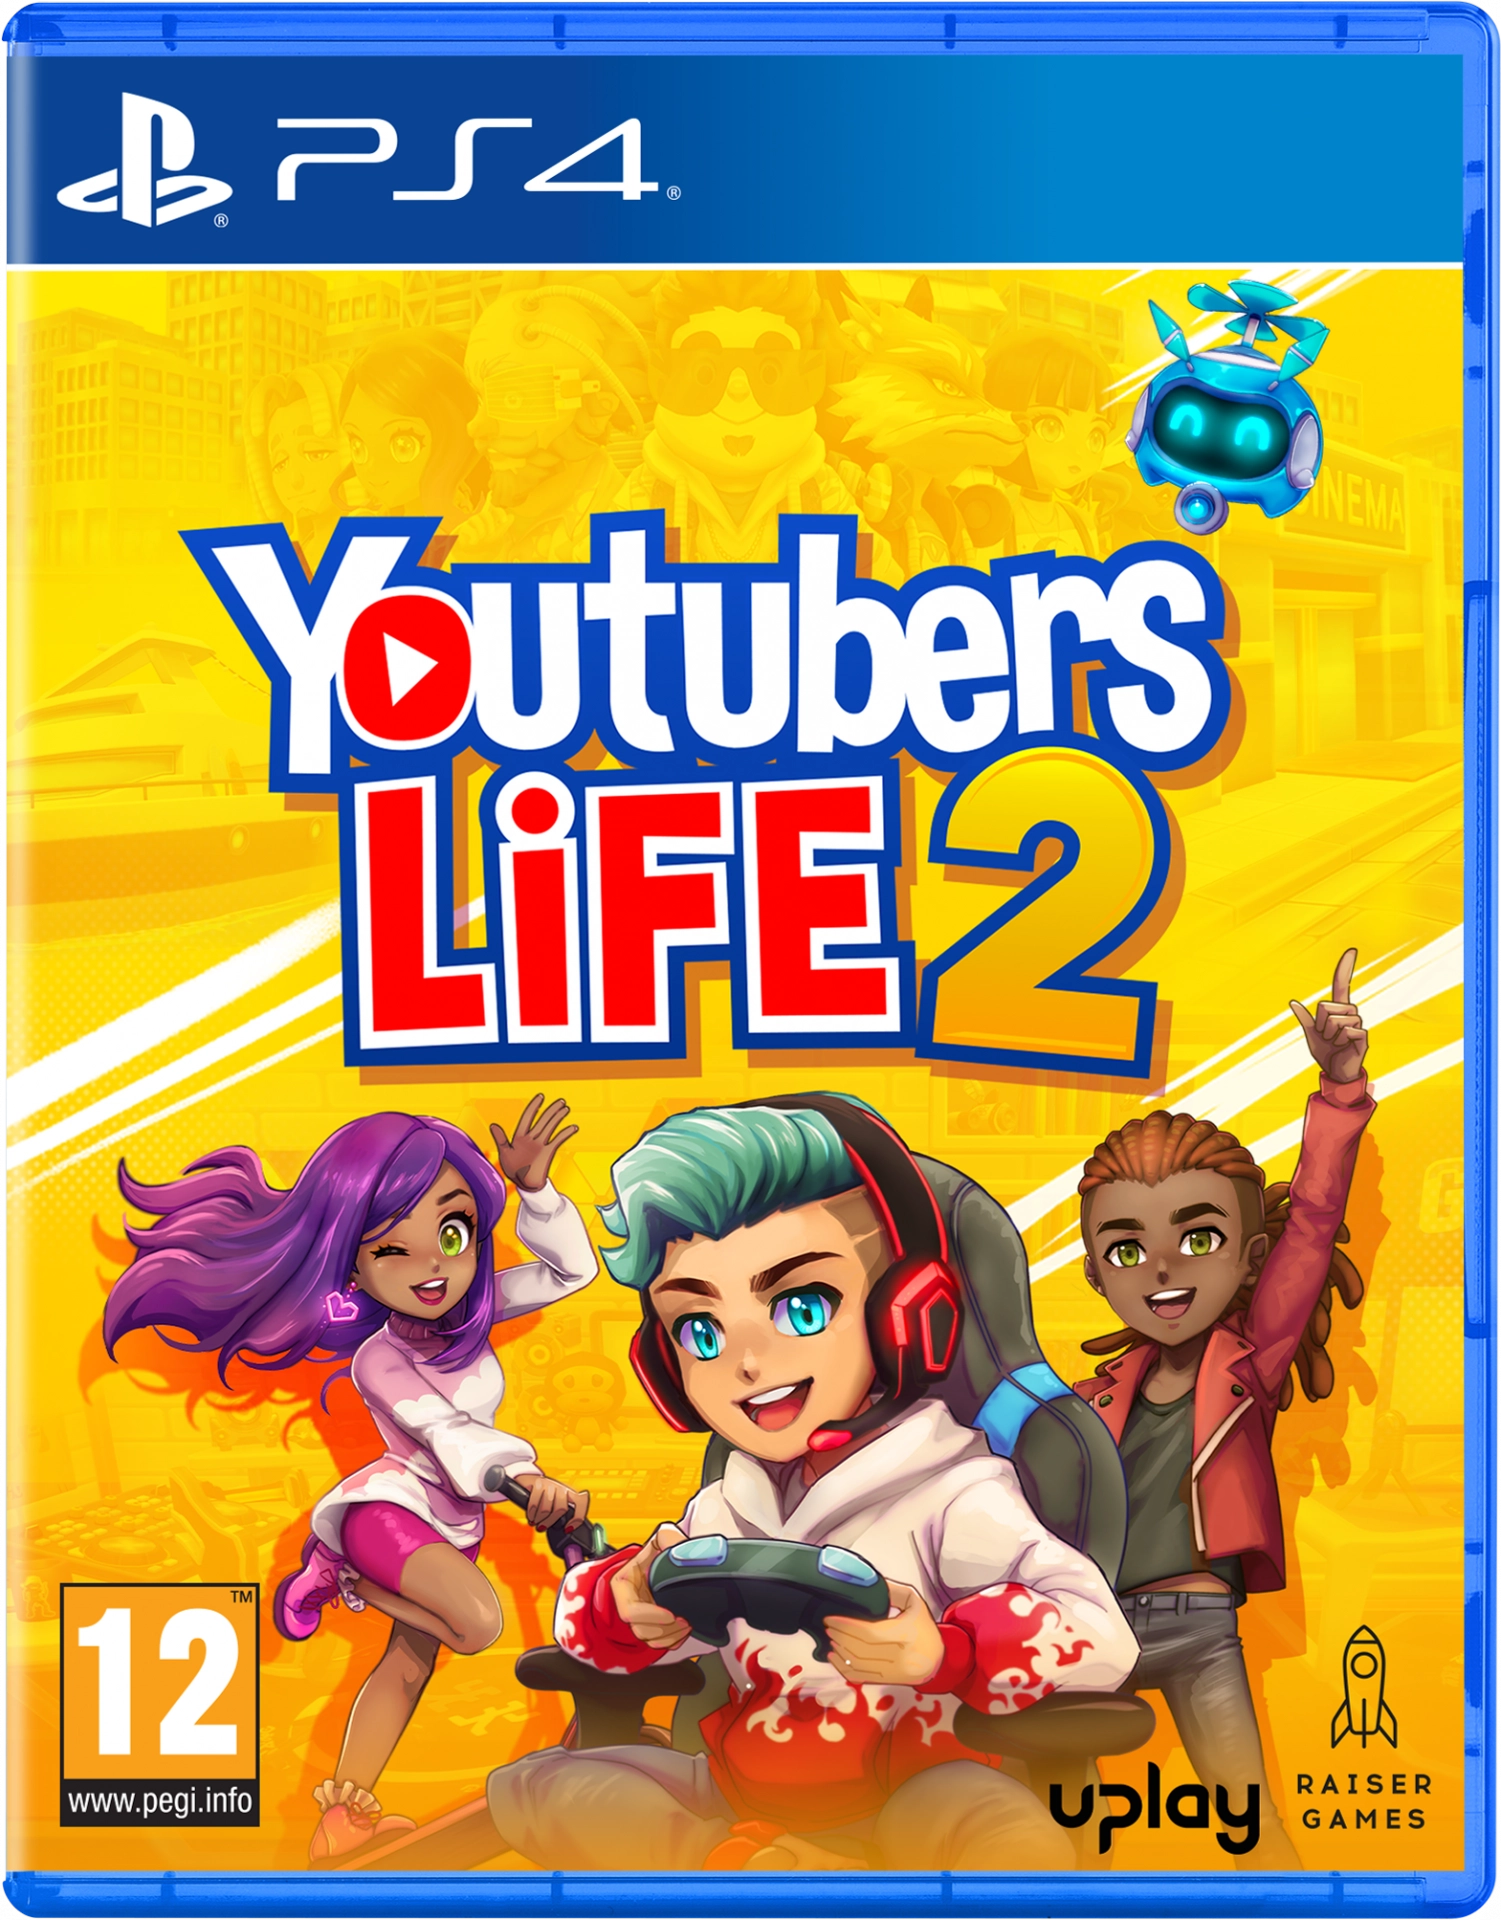 Youtubers Life 2 (PS4),  Raiser Games